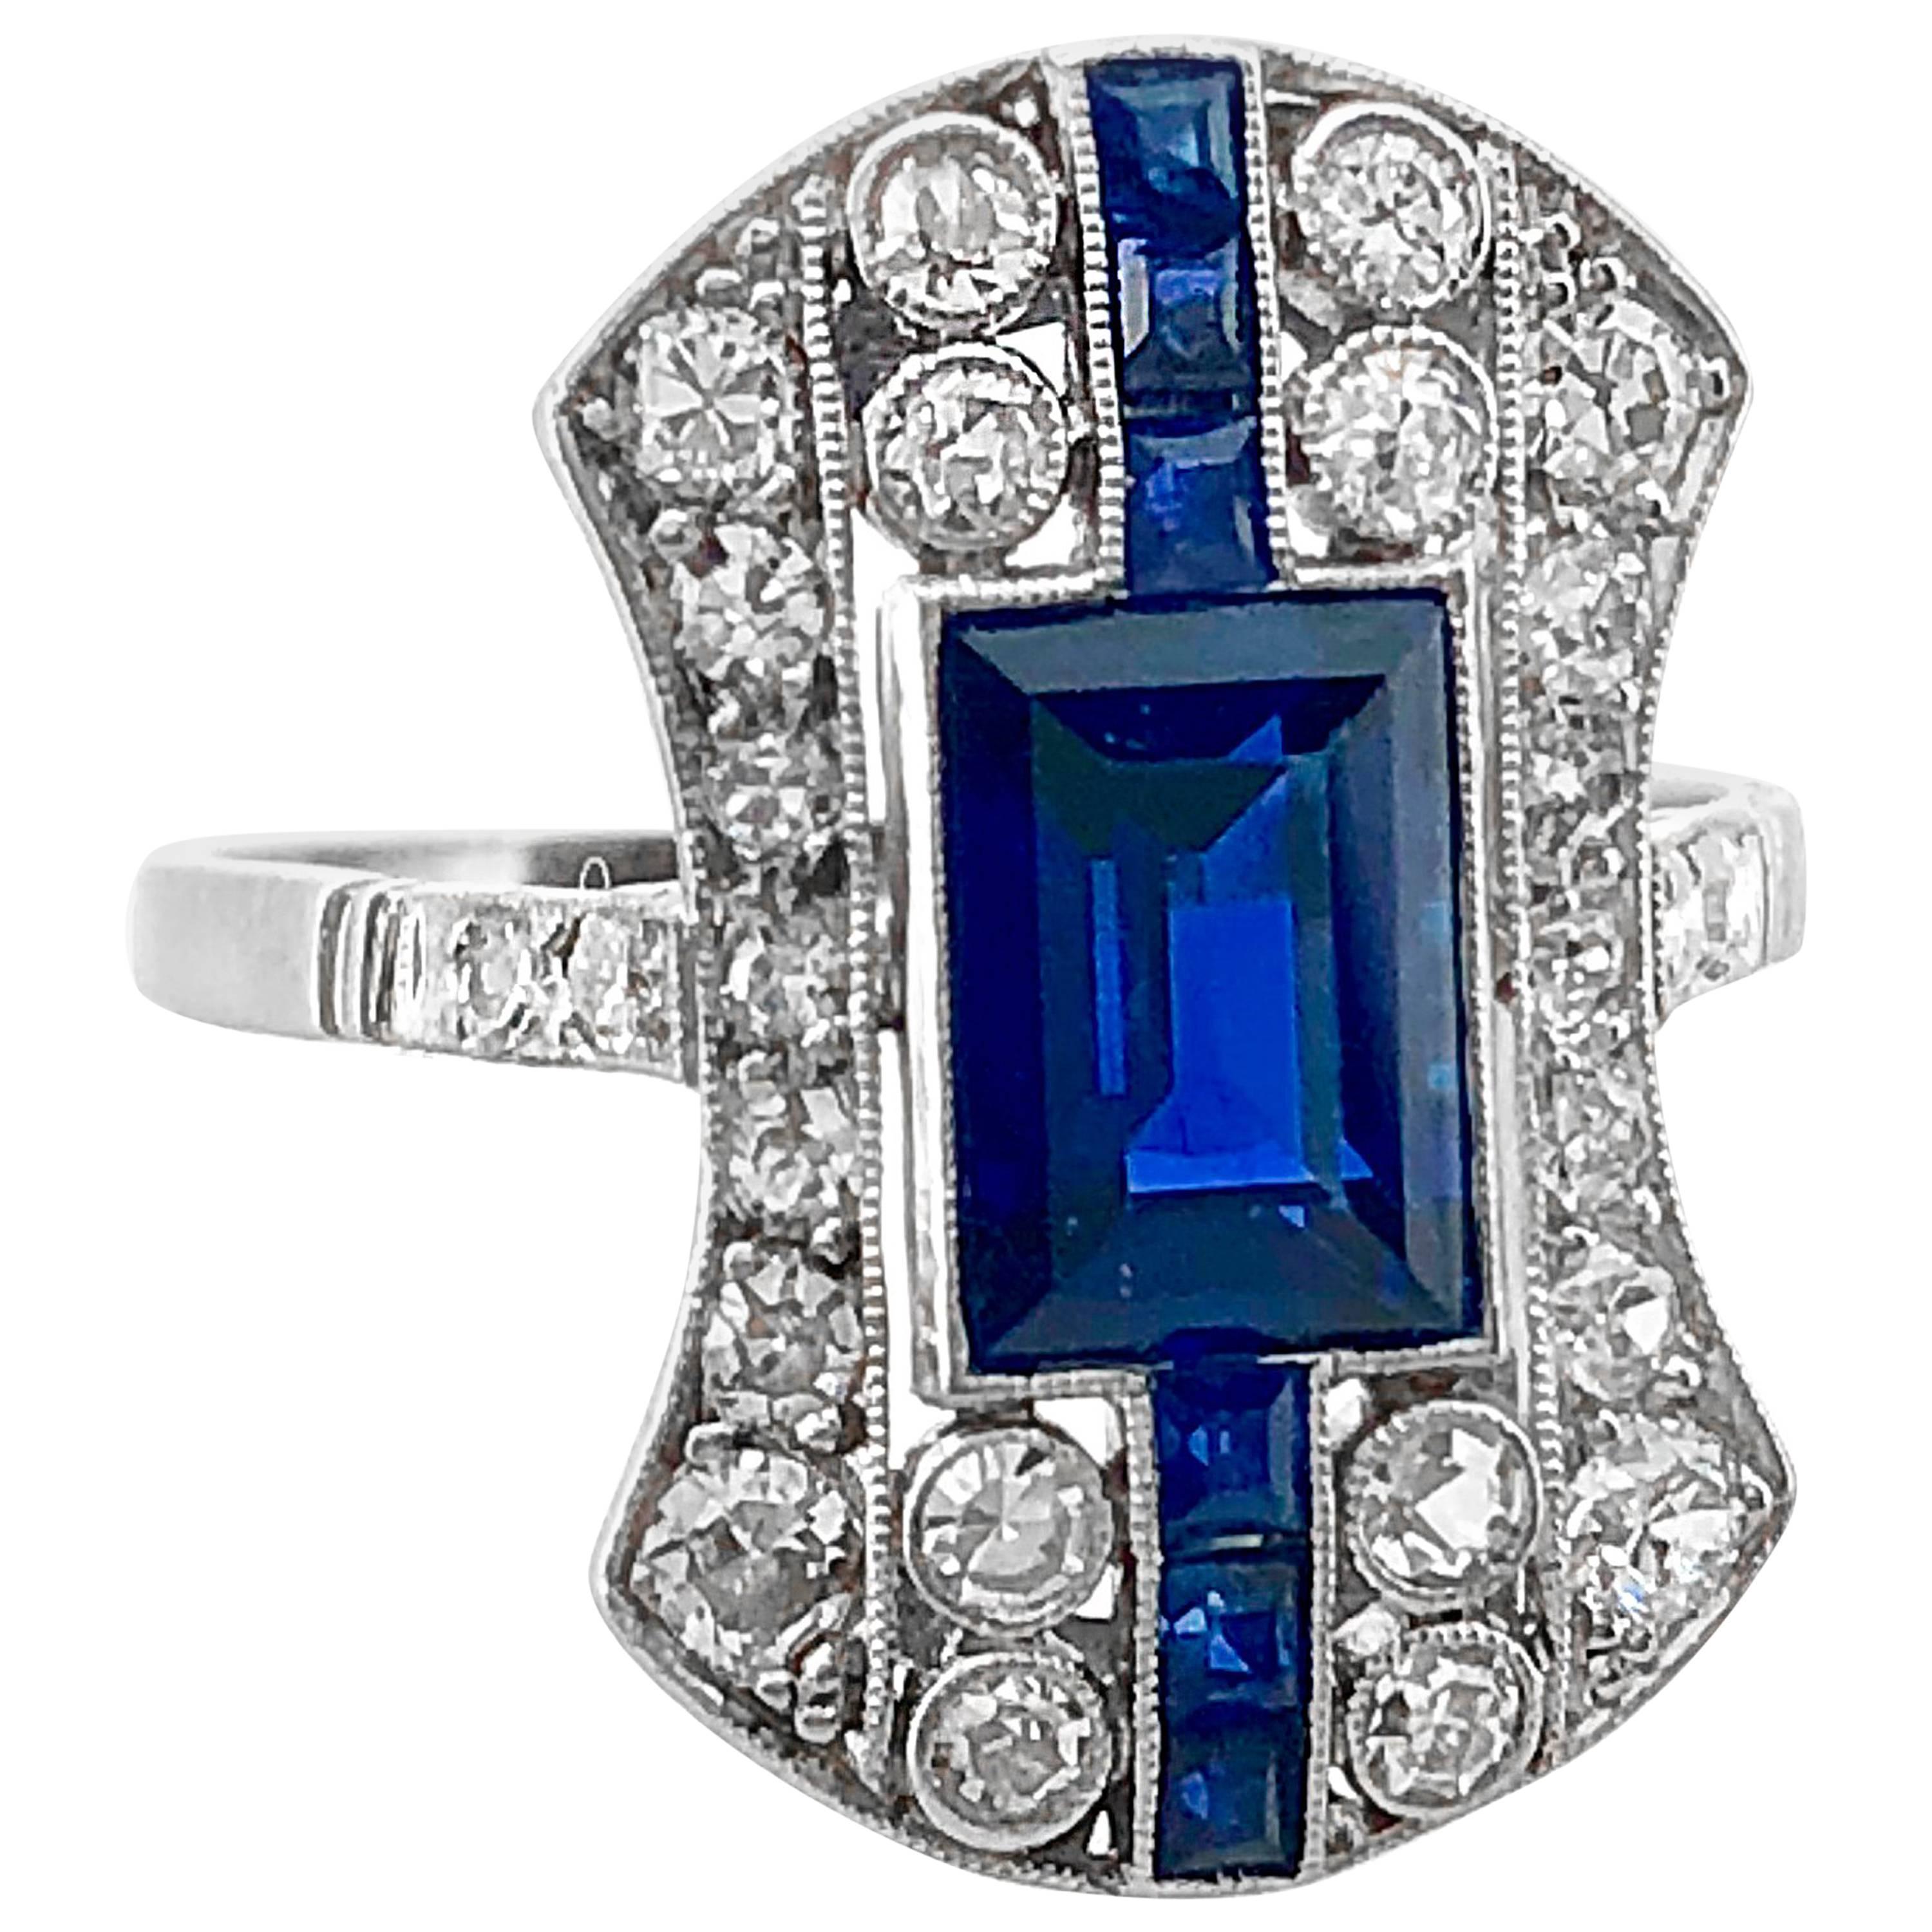 2.15 Carat Total Weight Sapphire Diamond Antique Fashion Ring Platinum